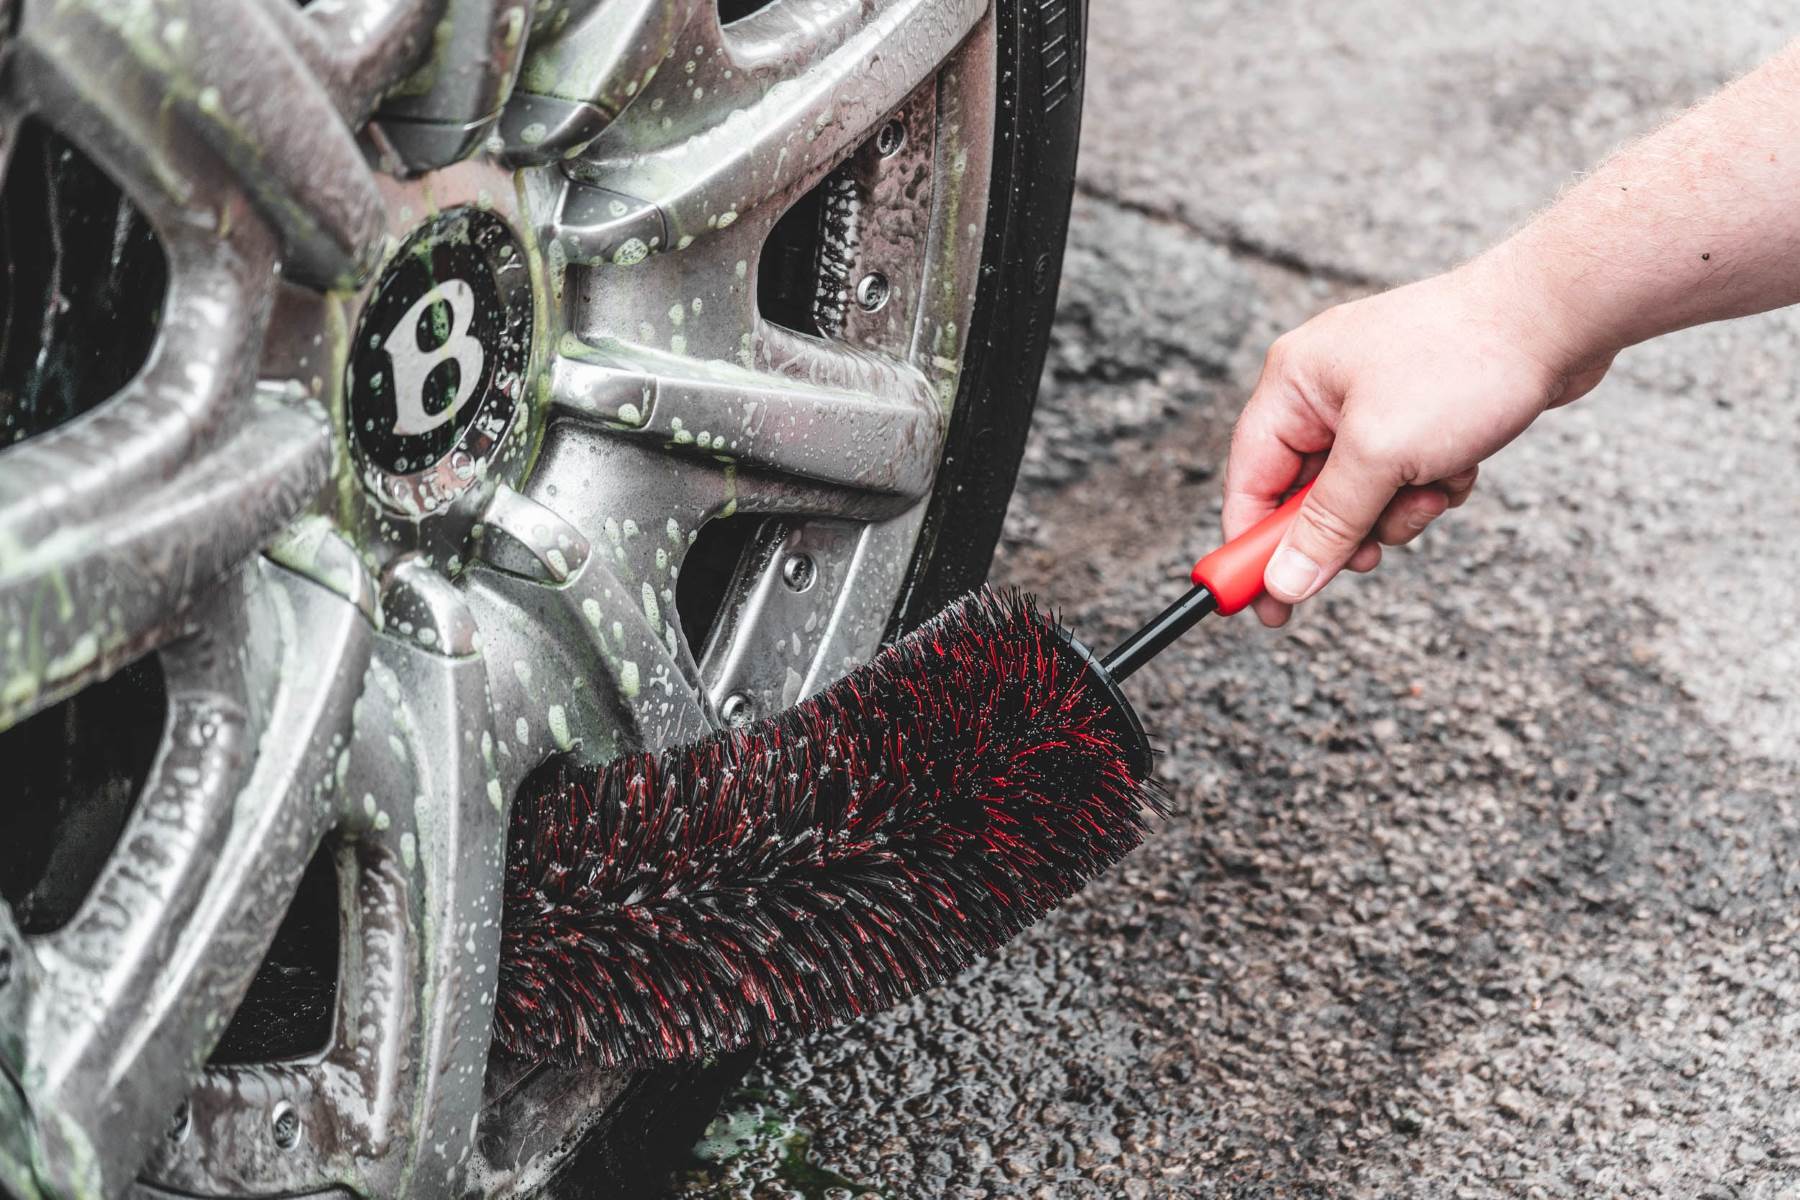 Car Wheel Brush Tire Cleaning Brush Tool Car Rim Scrubber Cleaner Duster  Handle Motorcycle Truck Wheel Car Grooming Brush New - AliExpress